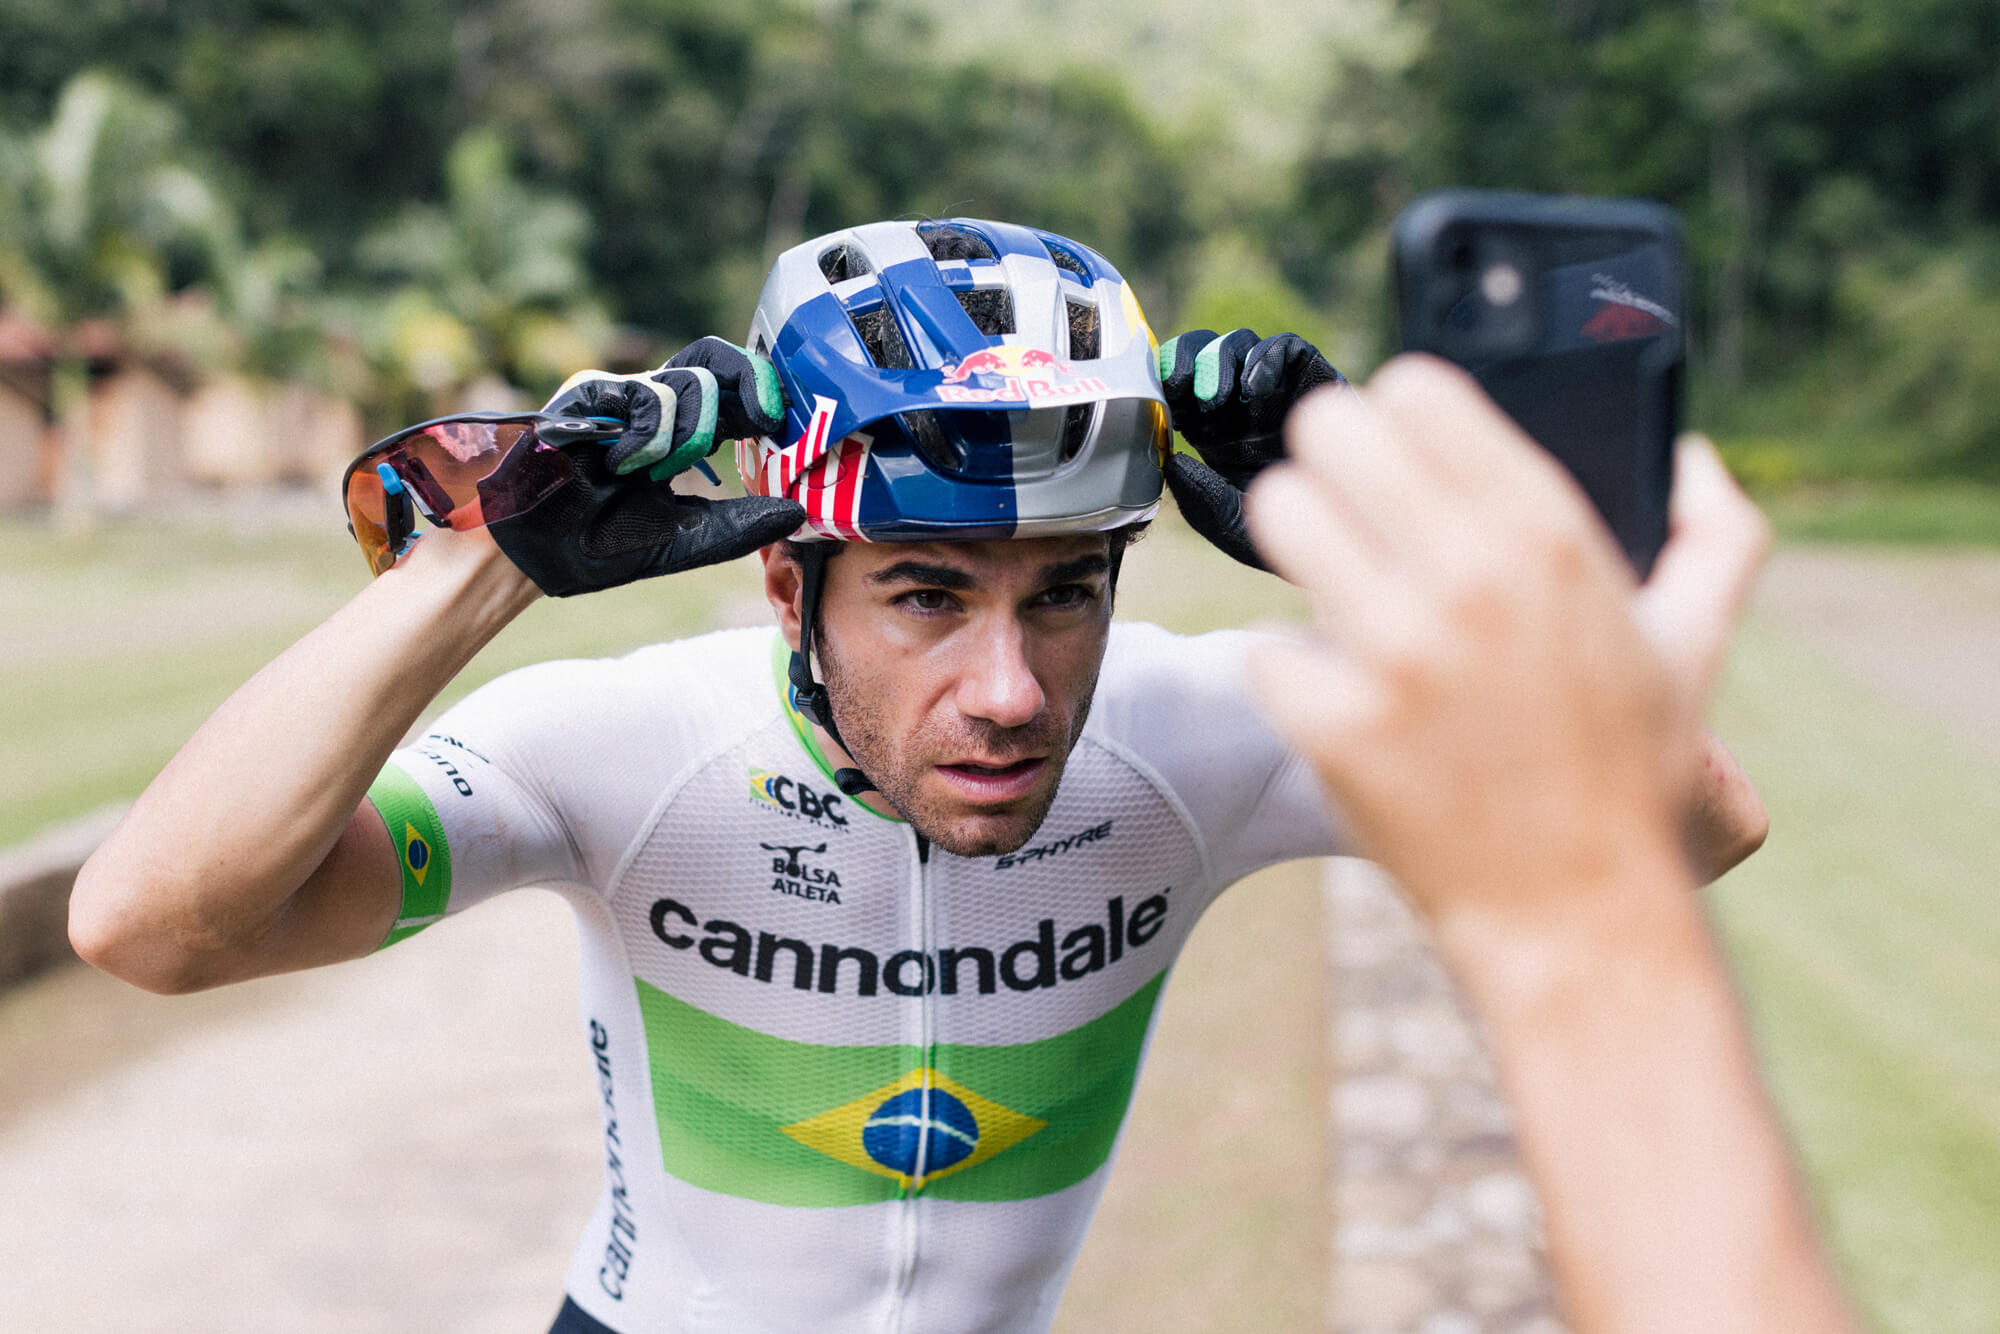 Henrique Avancini wearing his Red Bull helmet mountain biking in Brazil